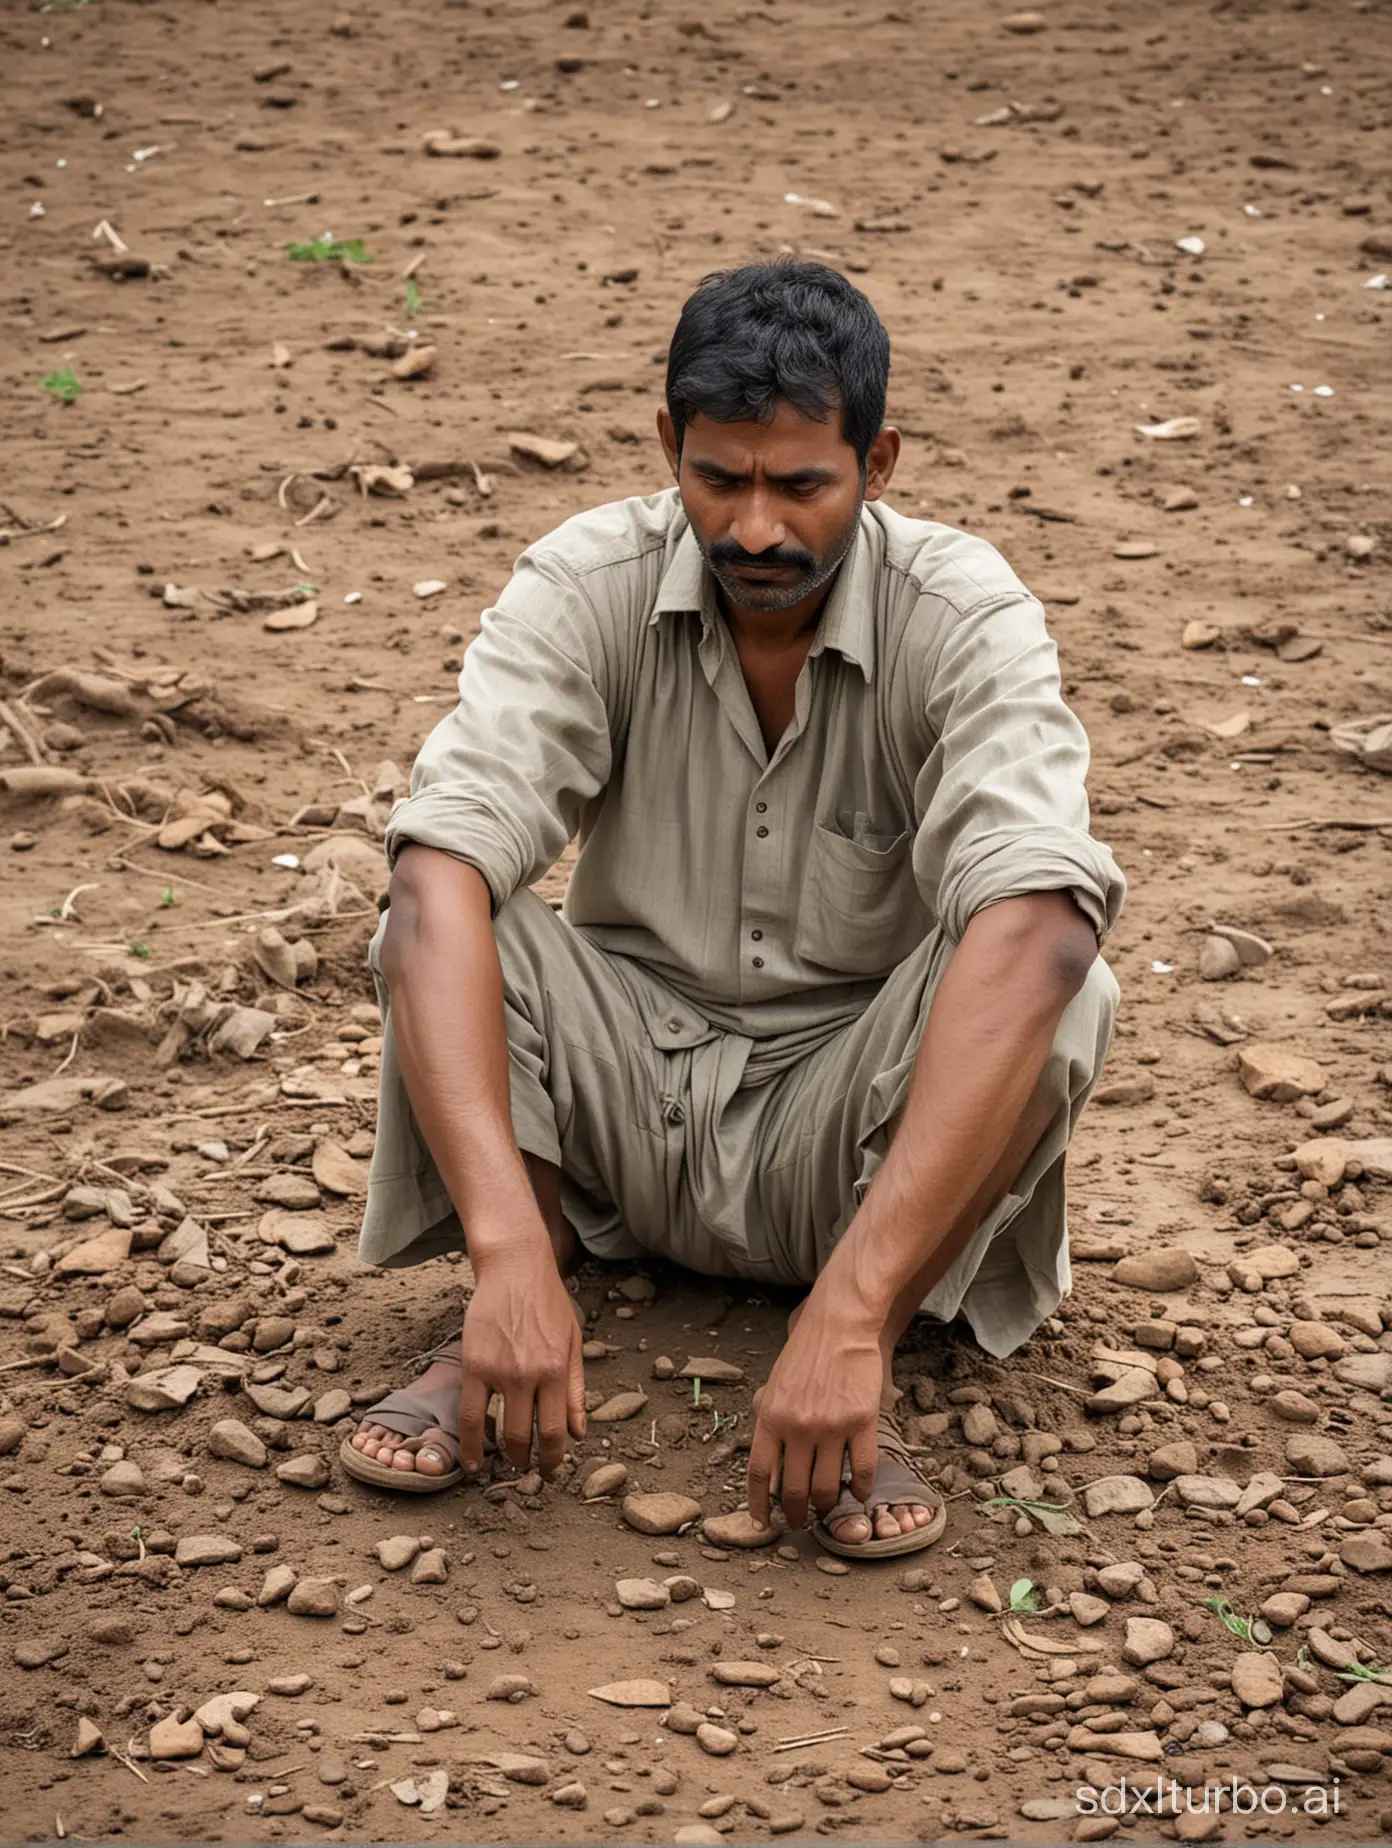 Sad-Indian-Farmer-Sitting-on-the-Ground